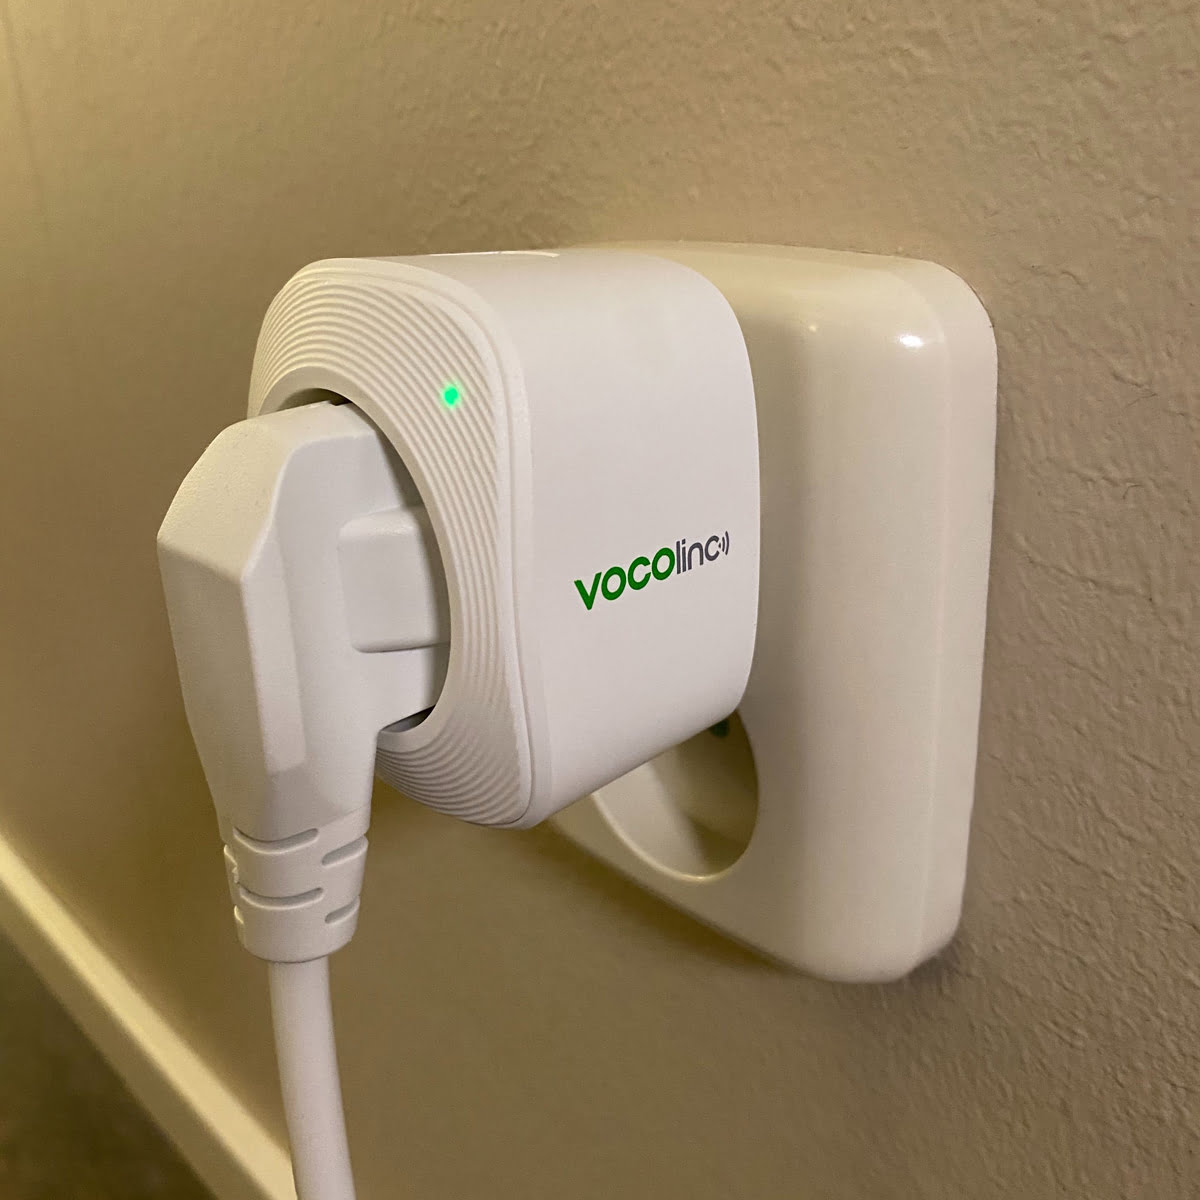 Vocolinc VP3 EU Smart Plug Now Available – Homekit News